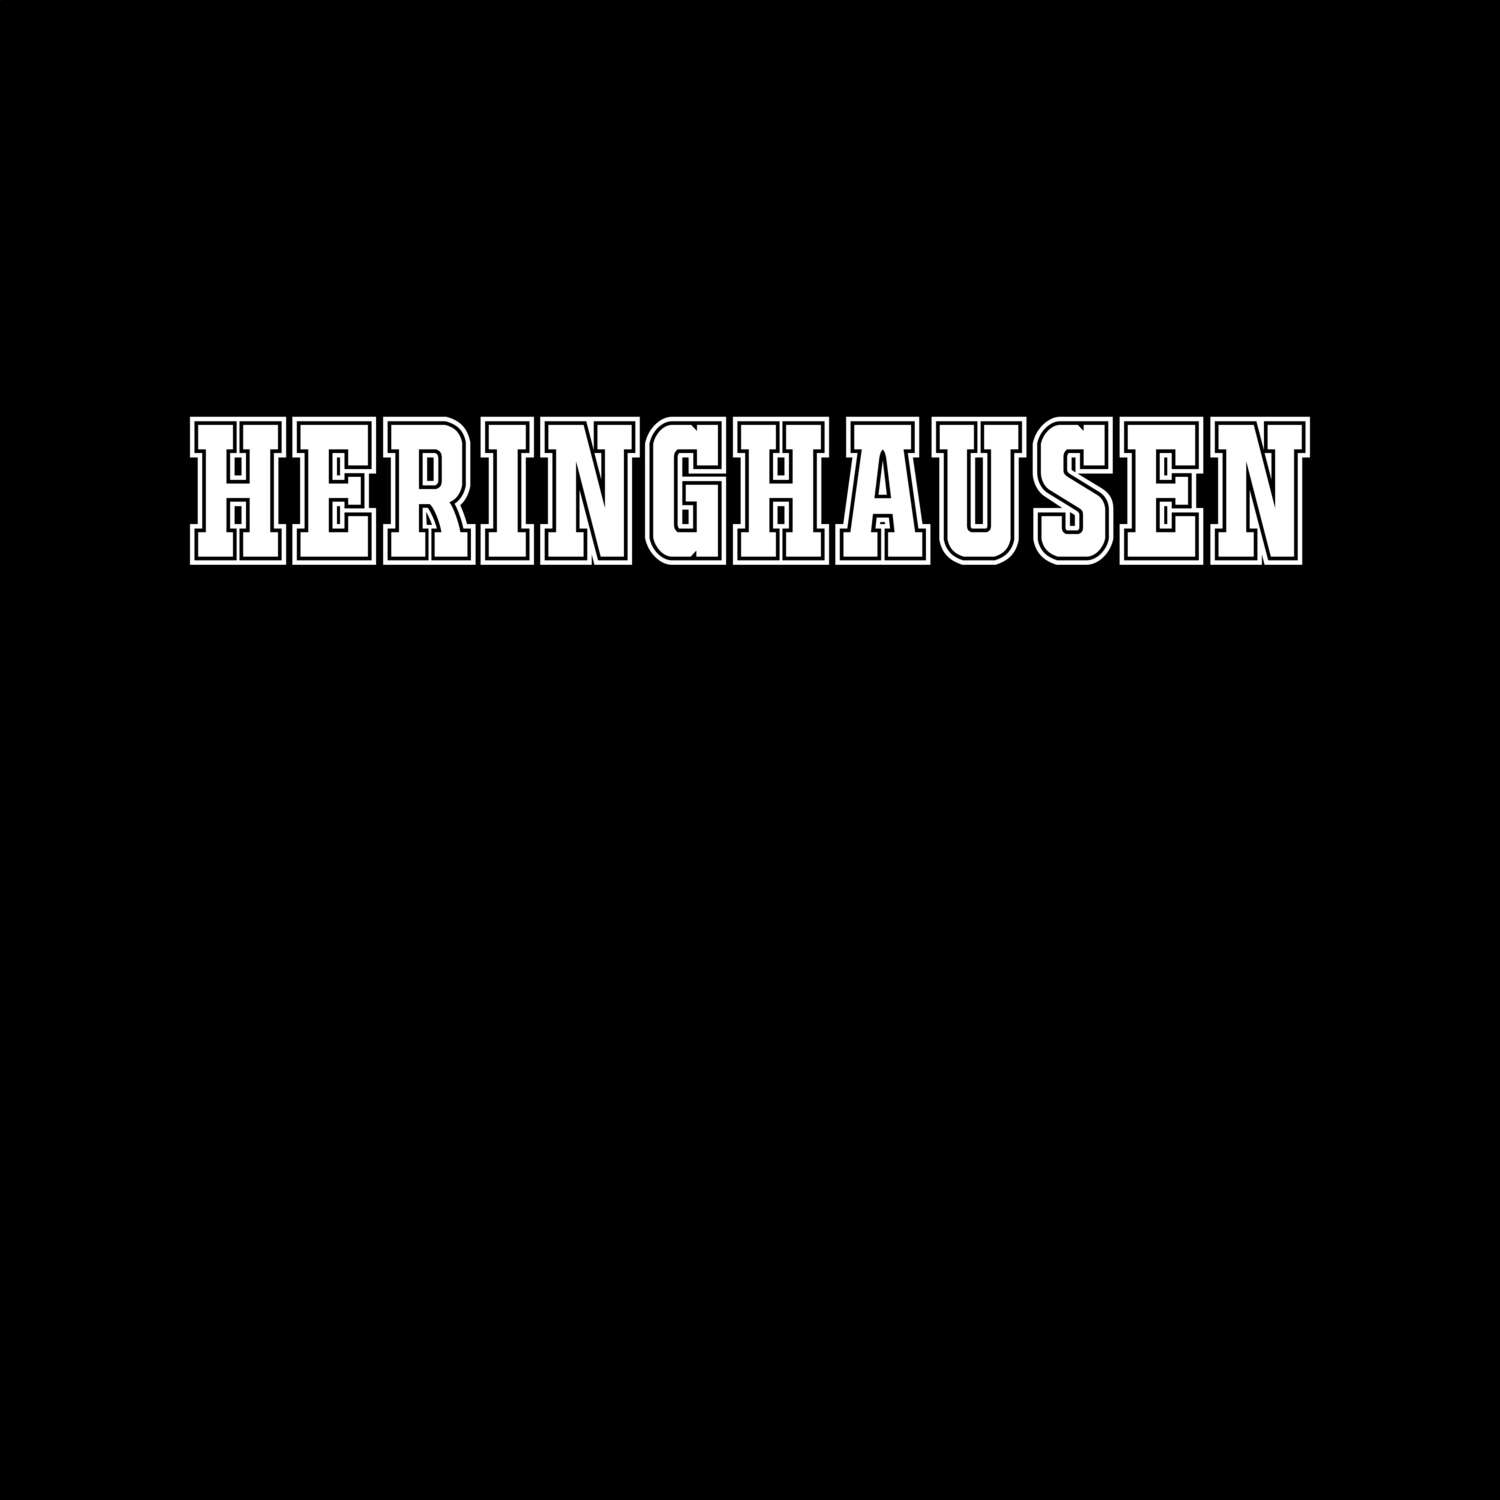 Heringhausen T-Shirt »Classic«